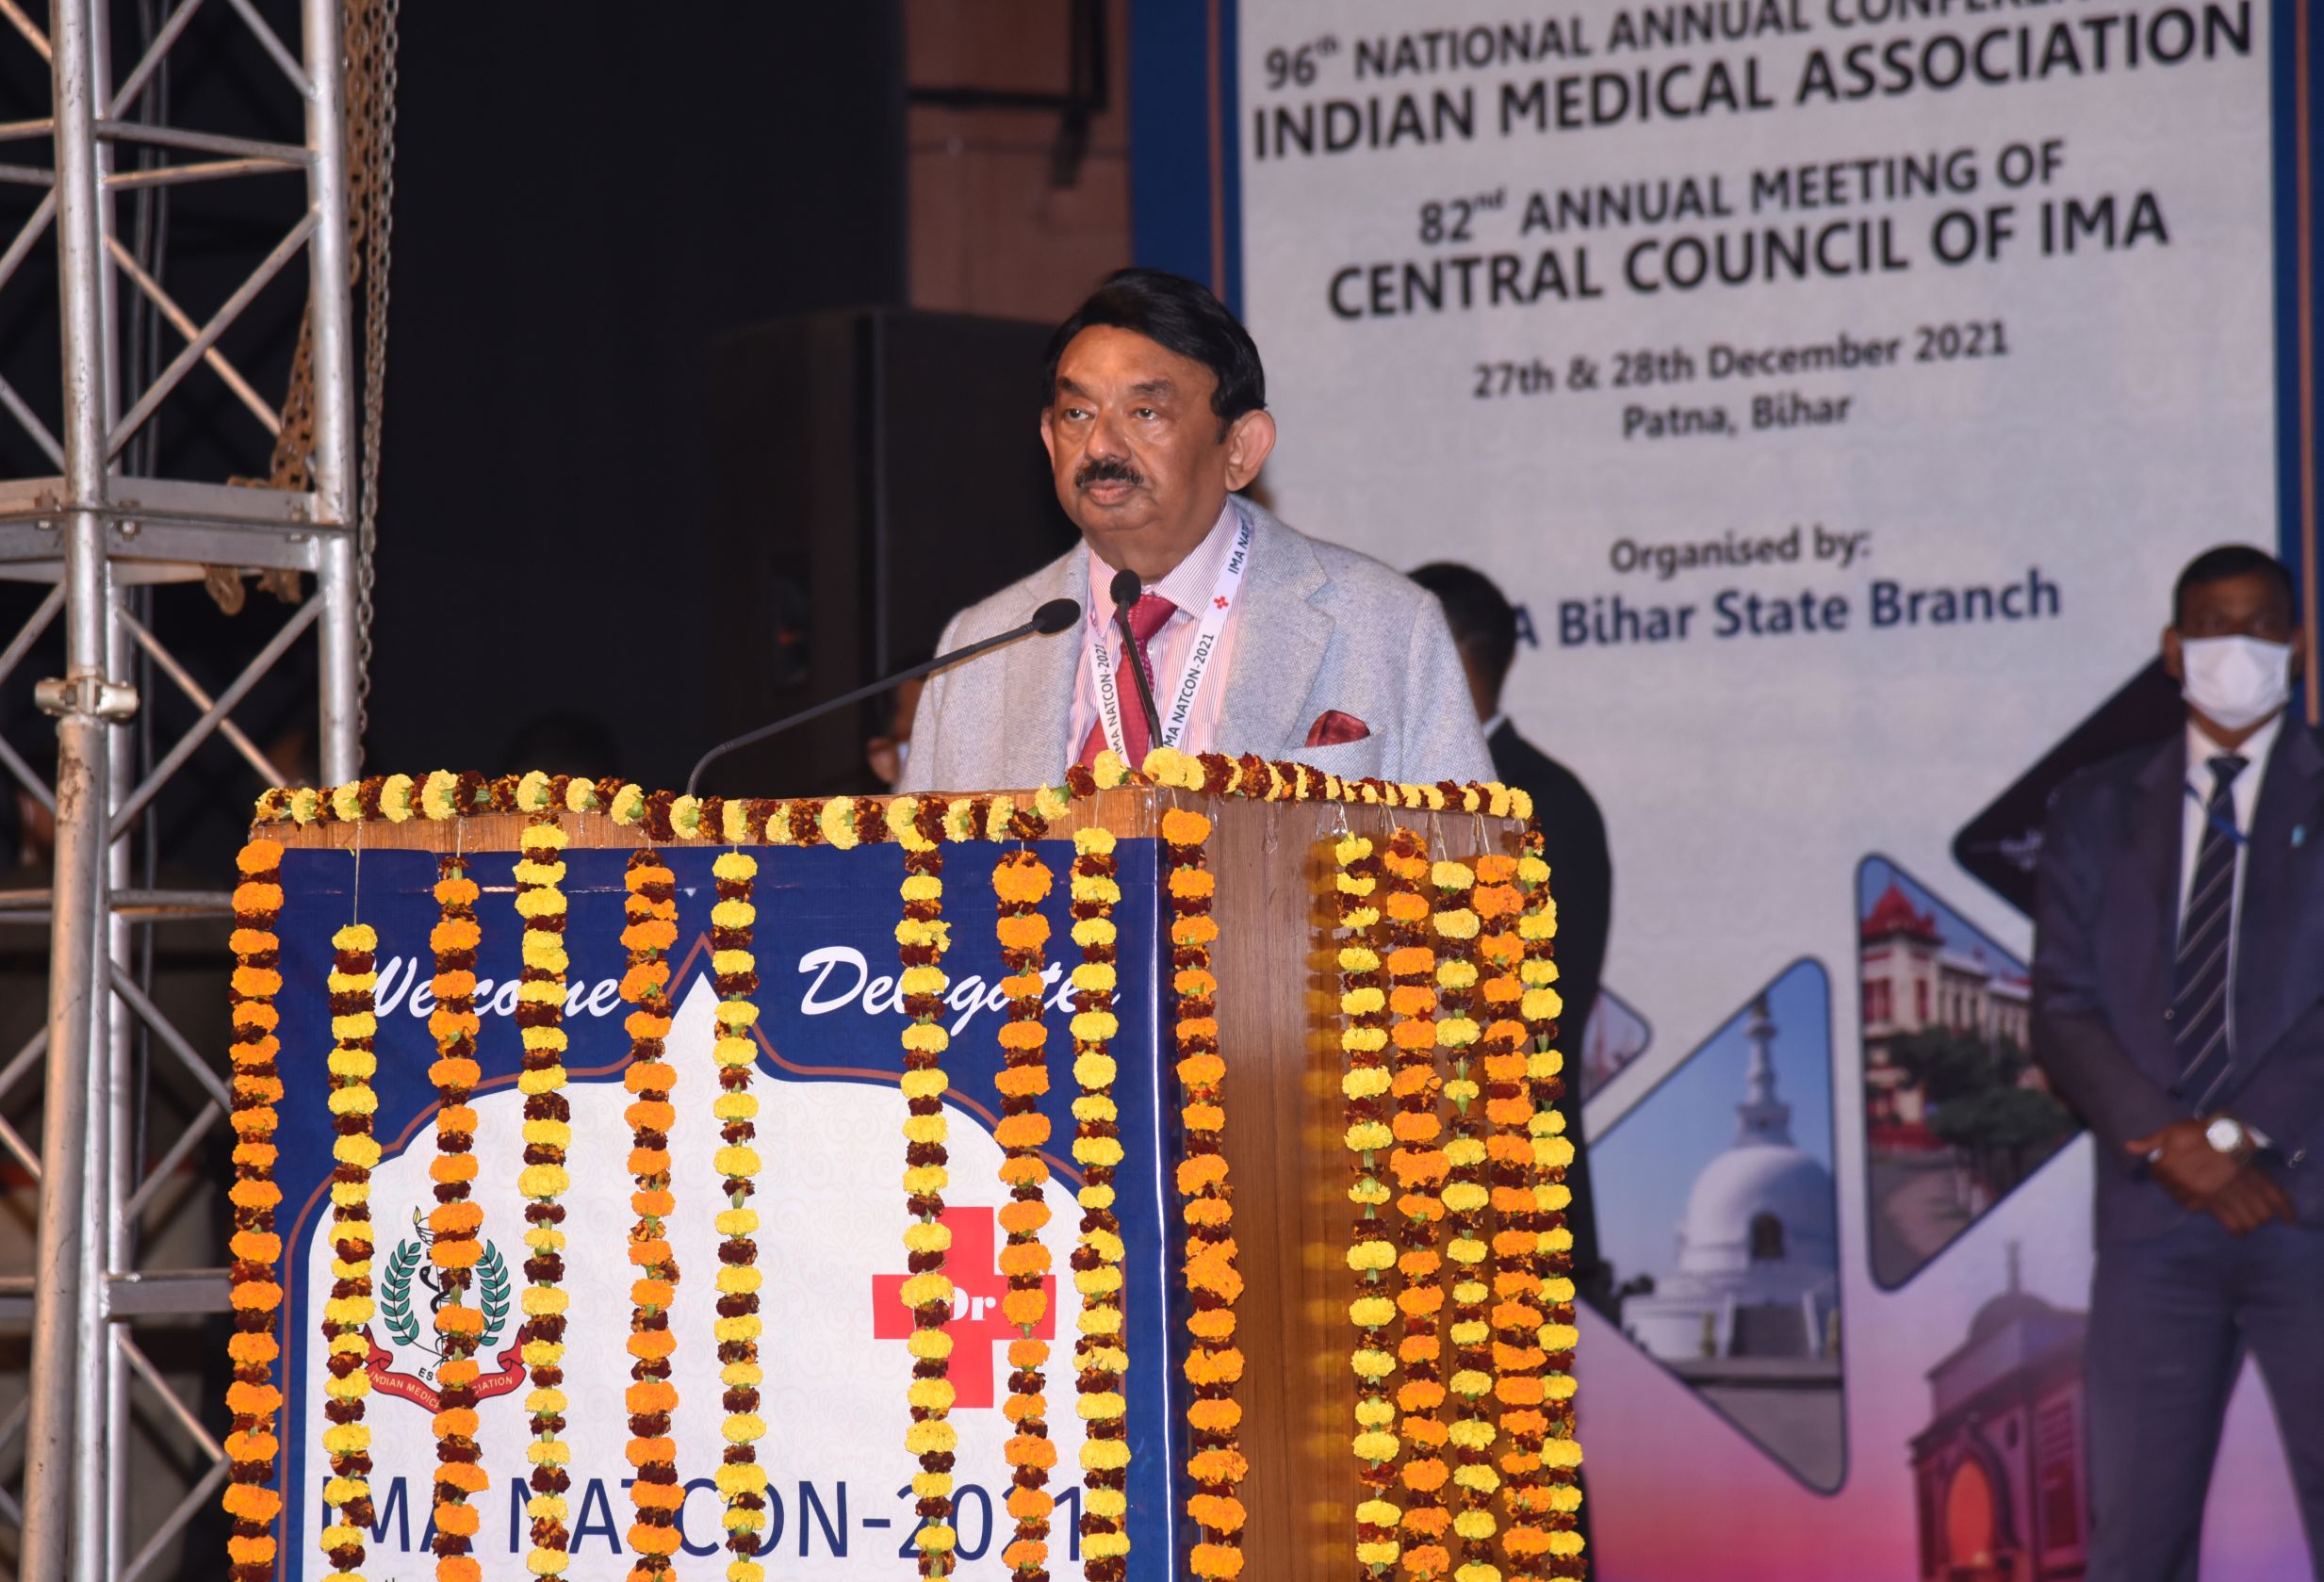 Dr. Desai Ketan DhirajLal – Pinnacles of Medical World